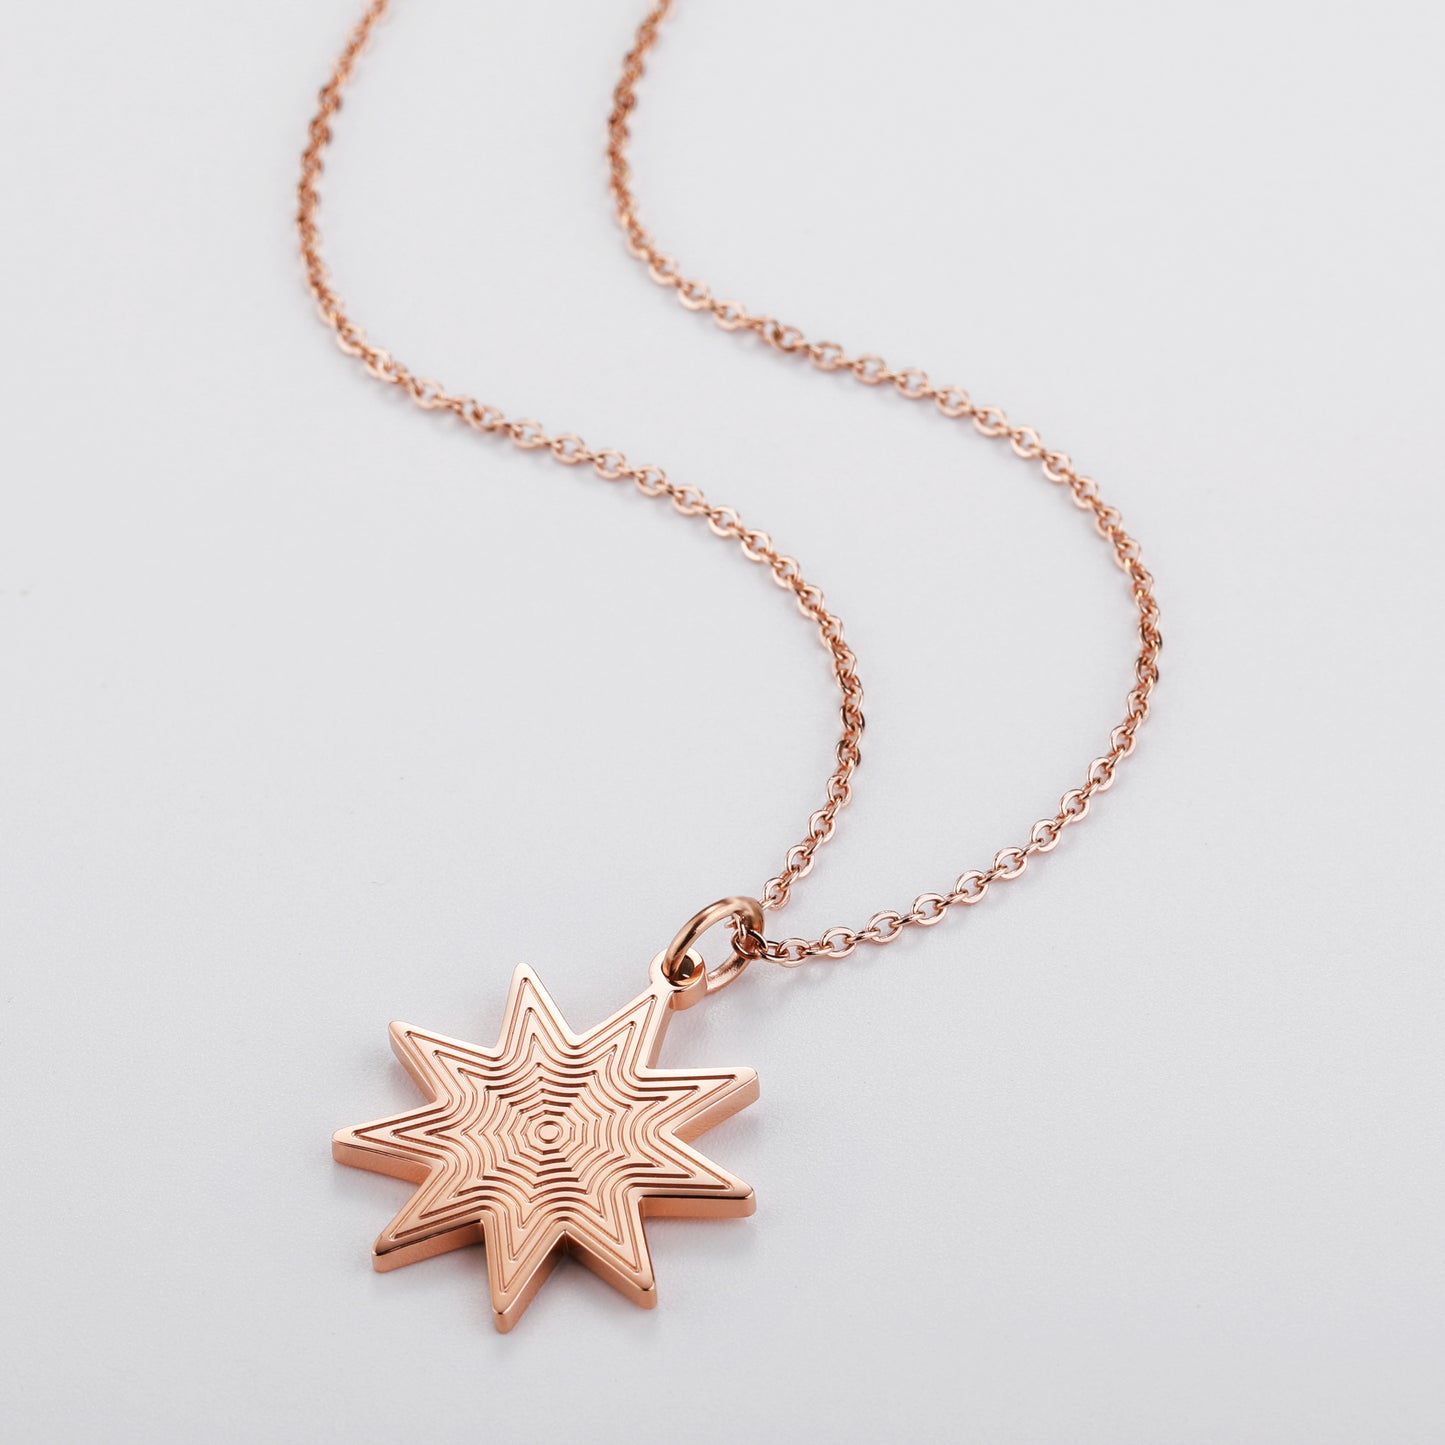 Darjali Jewelry Radiant Star Necklace 18K Rose Gold